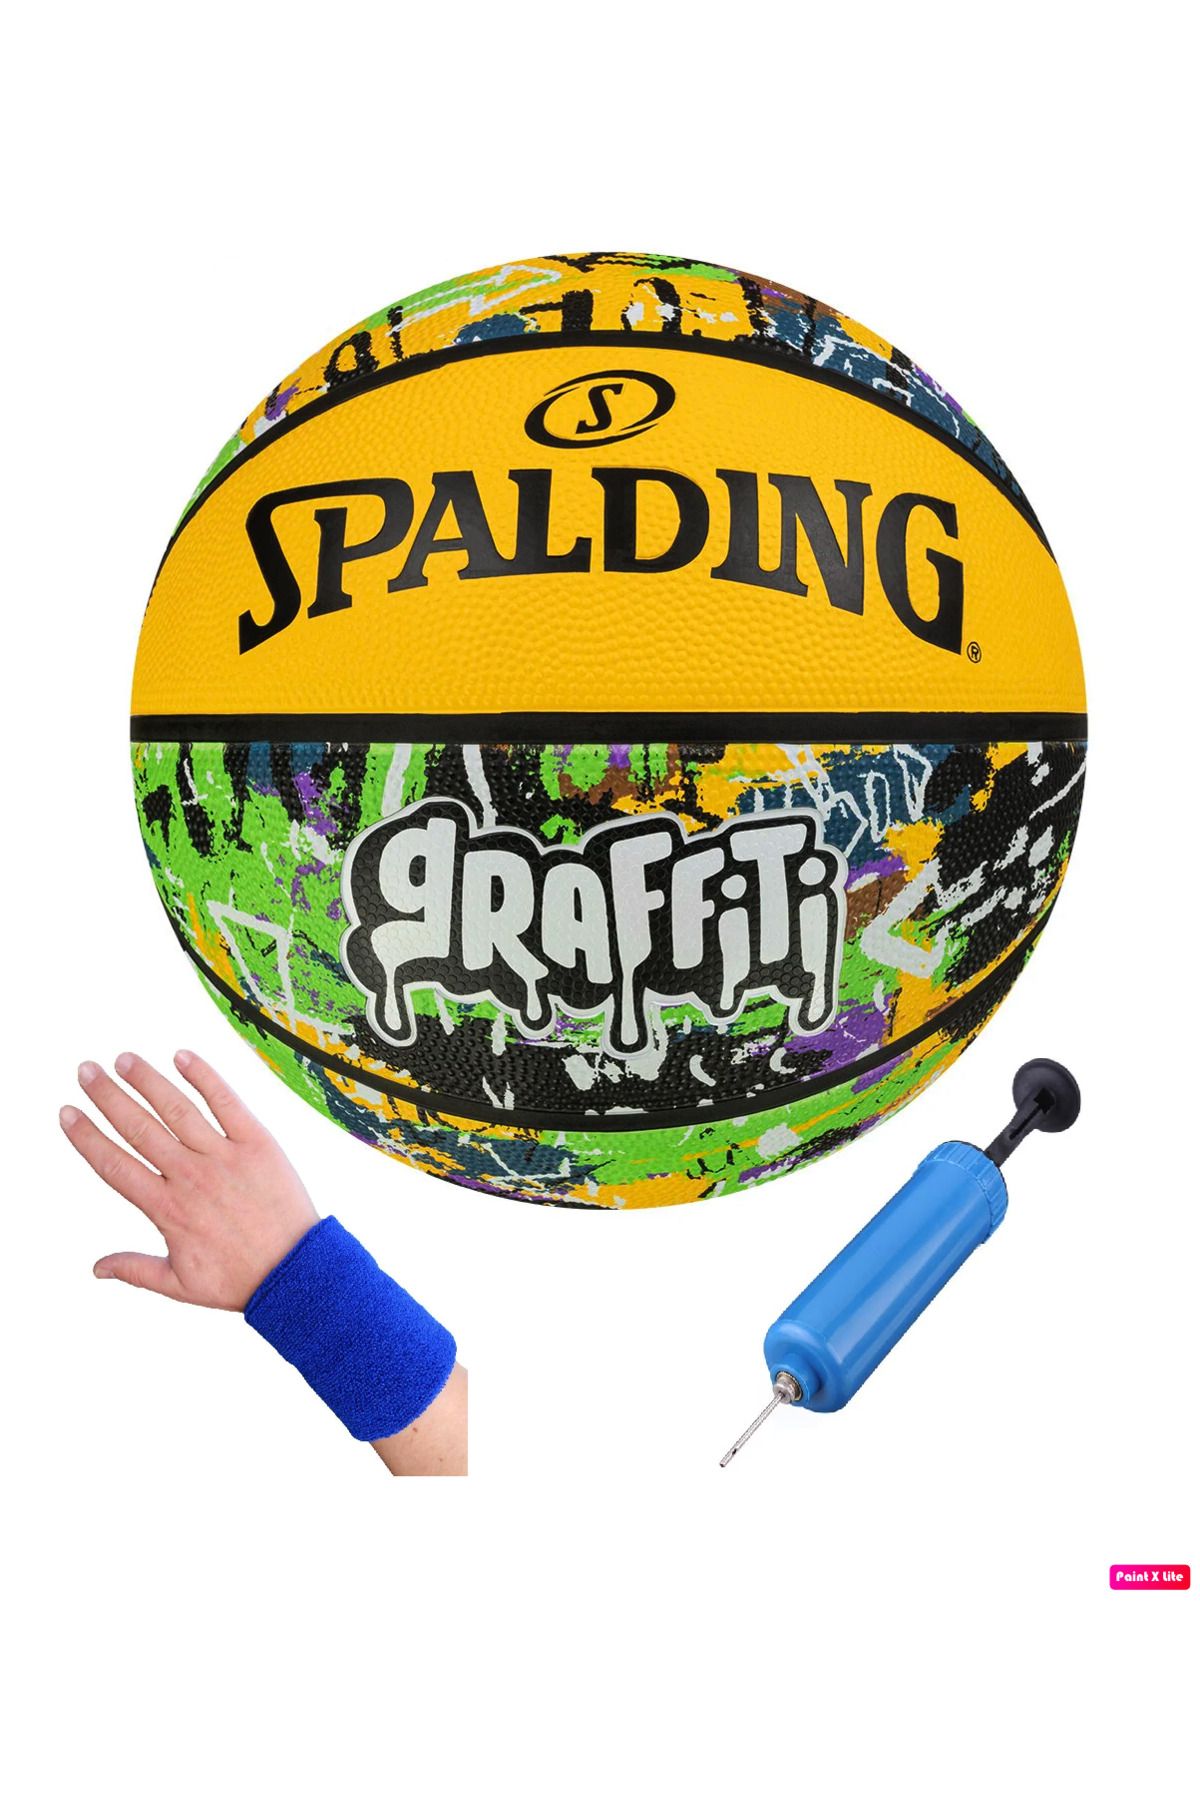 Spalding Graffiti 8 Panel Basketbol Topu Performance Outdoor Kauçuk Yüzey + Pompa + Havlu Bileklik